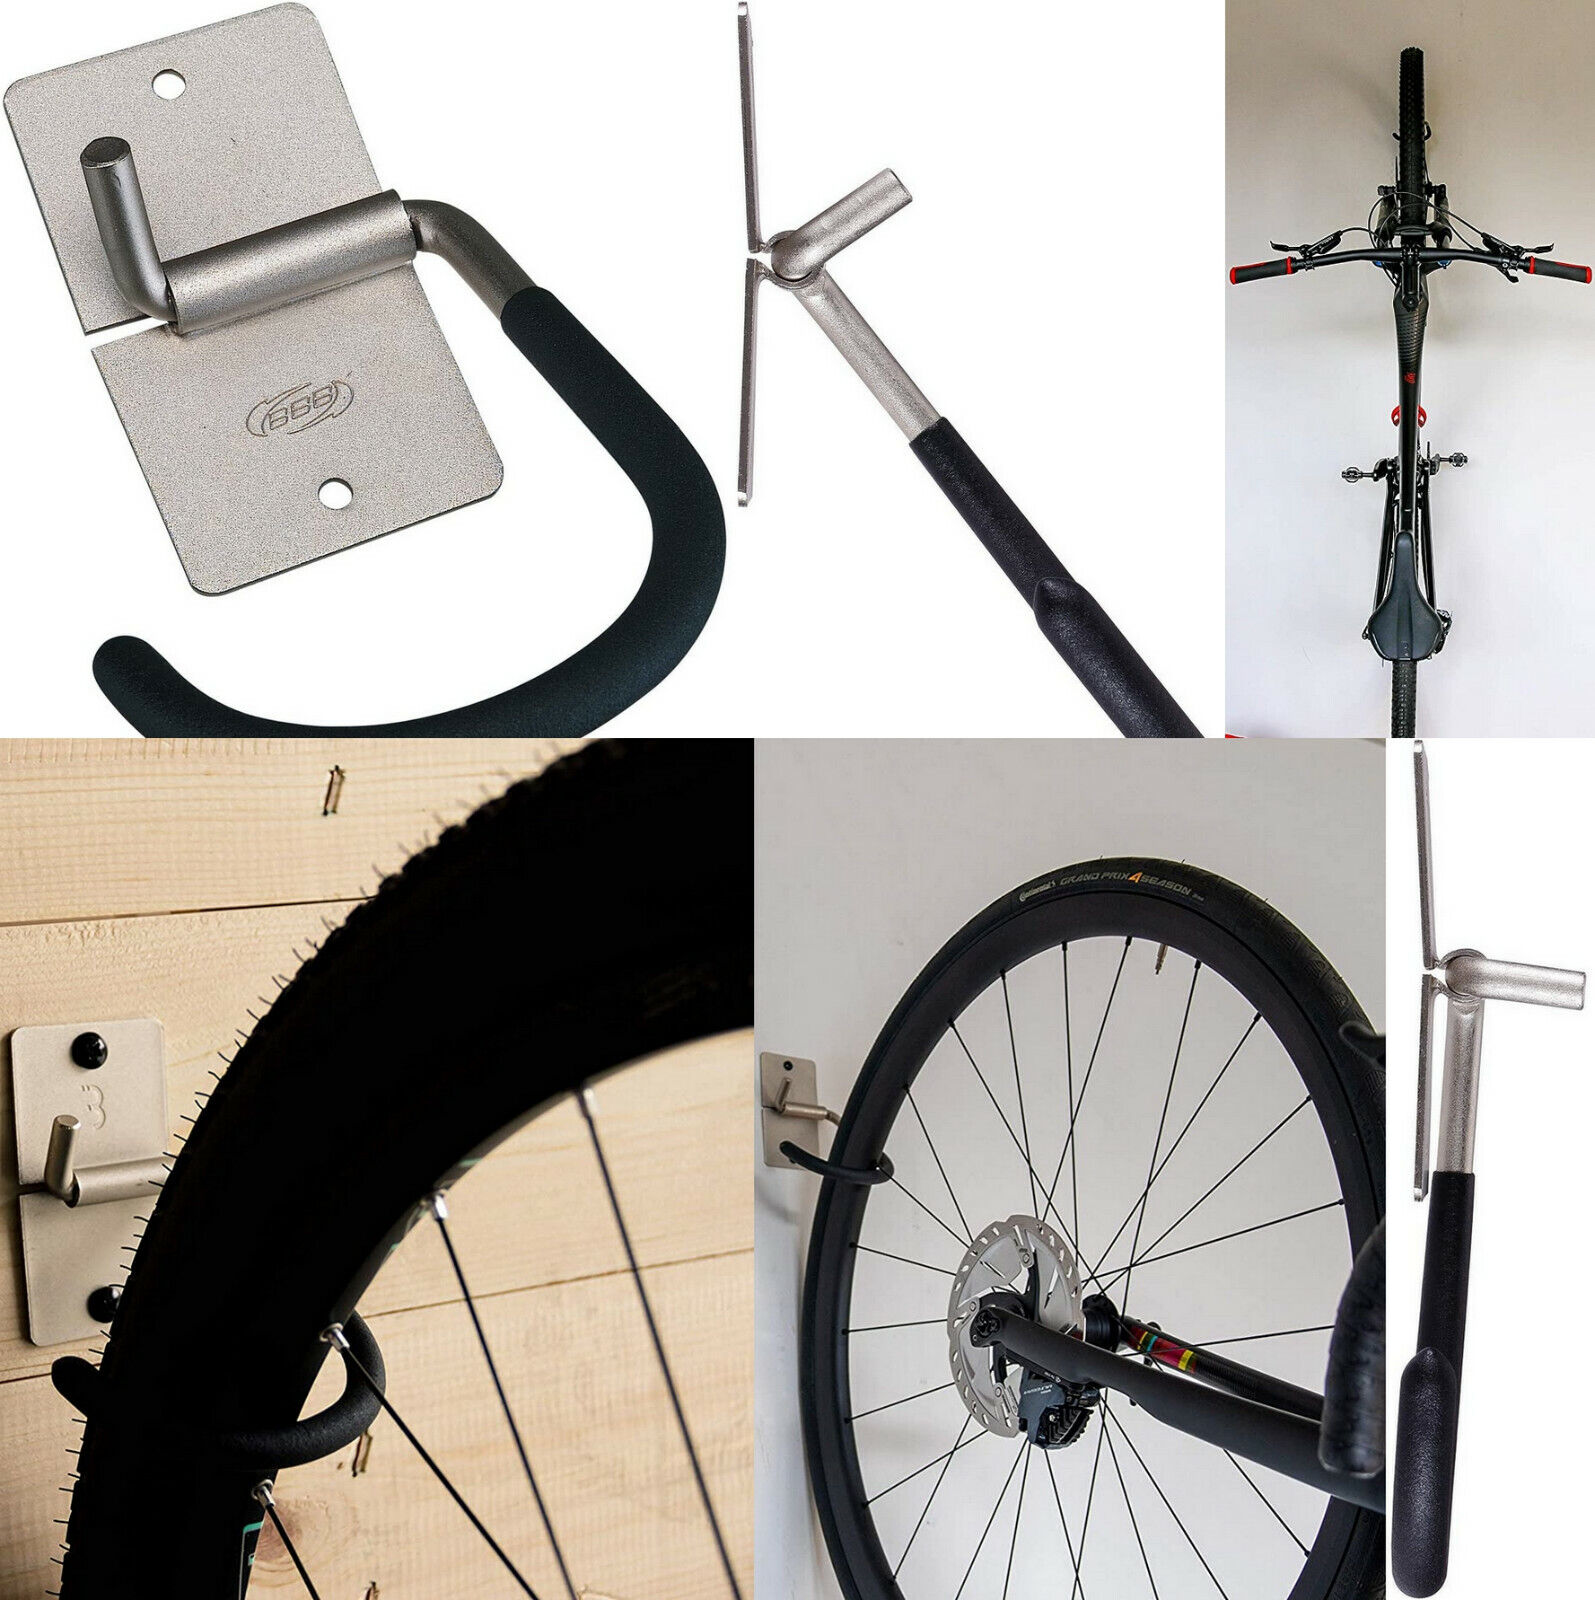 Soporte de pared para bicicleta hasta 15 kg,acero inoxidable,ajustable,20x11x4cm